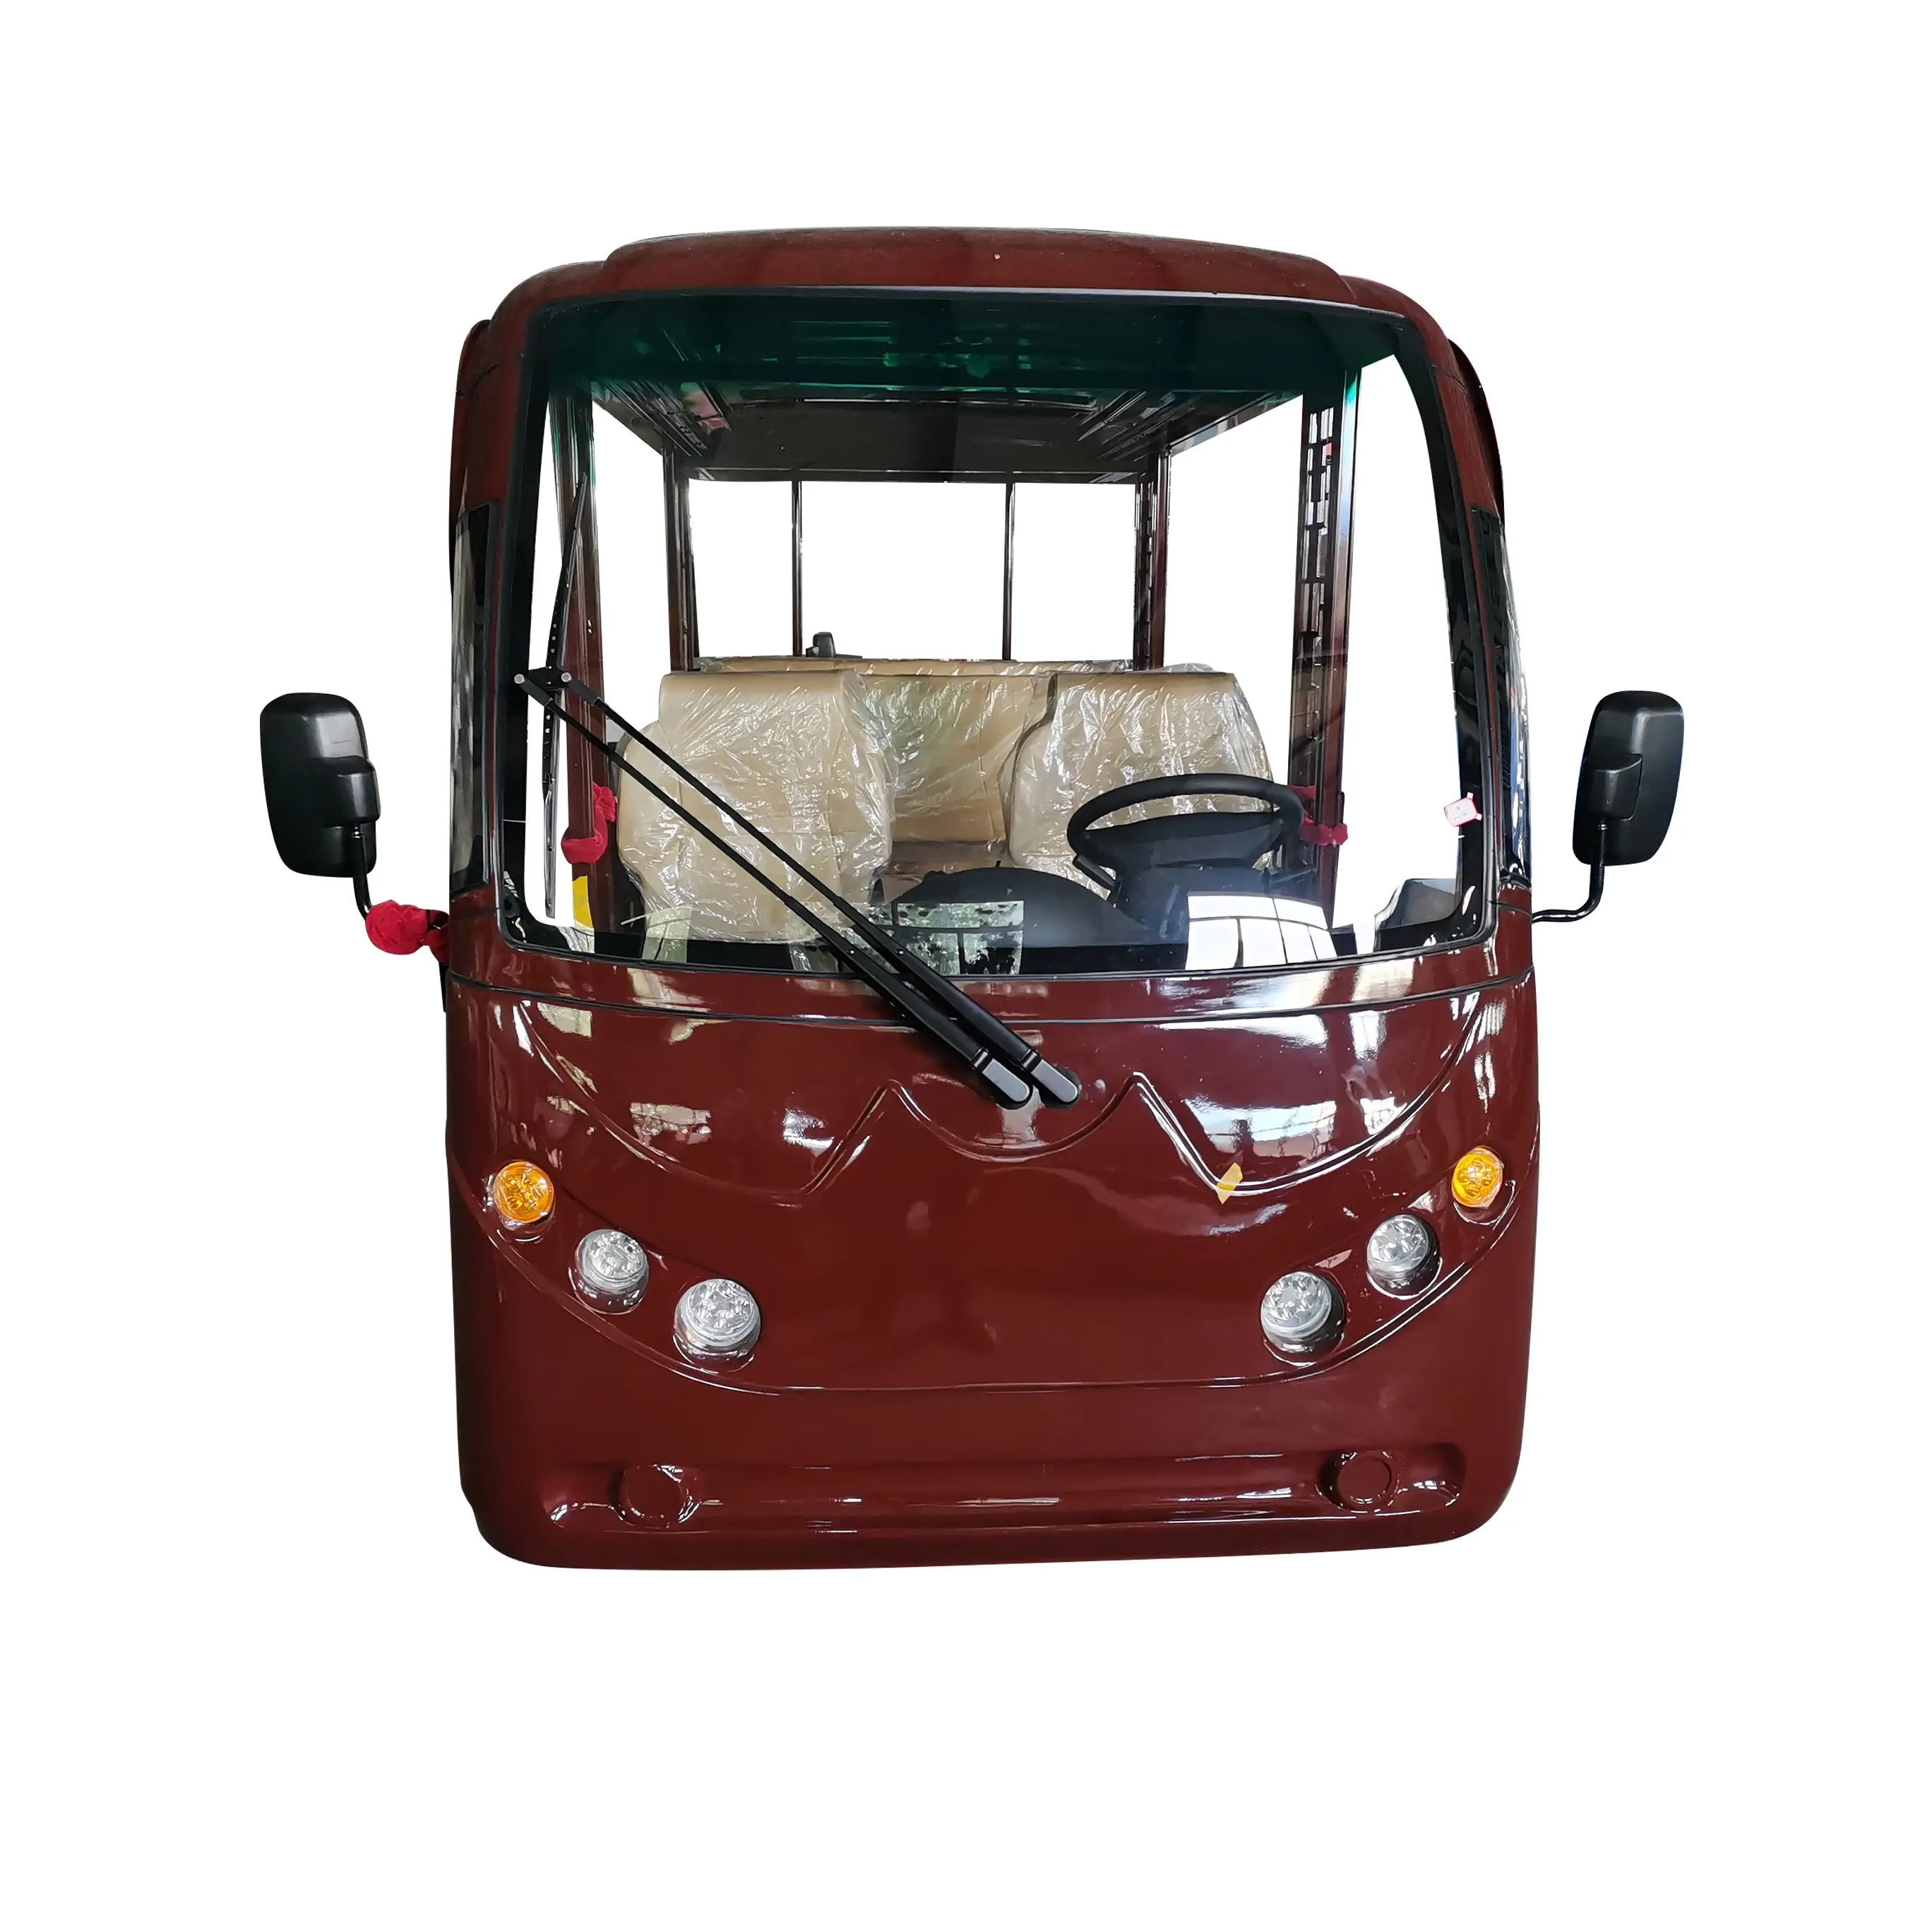 Beemotor OEM 10 인승 레저 전기 관광 버스 자동차 도매